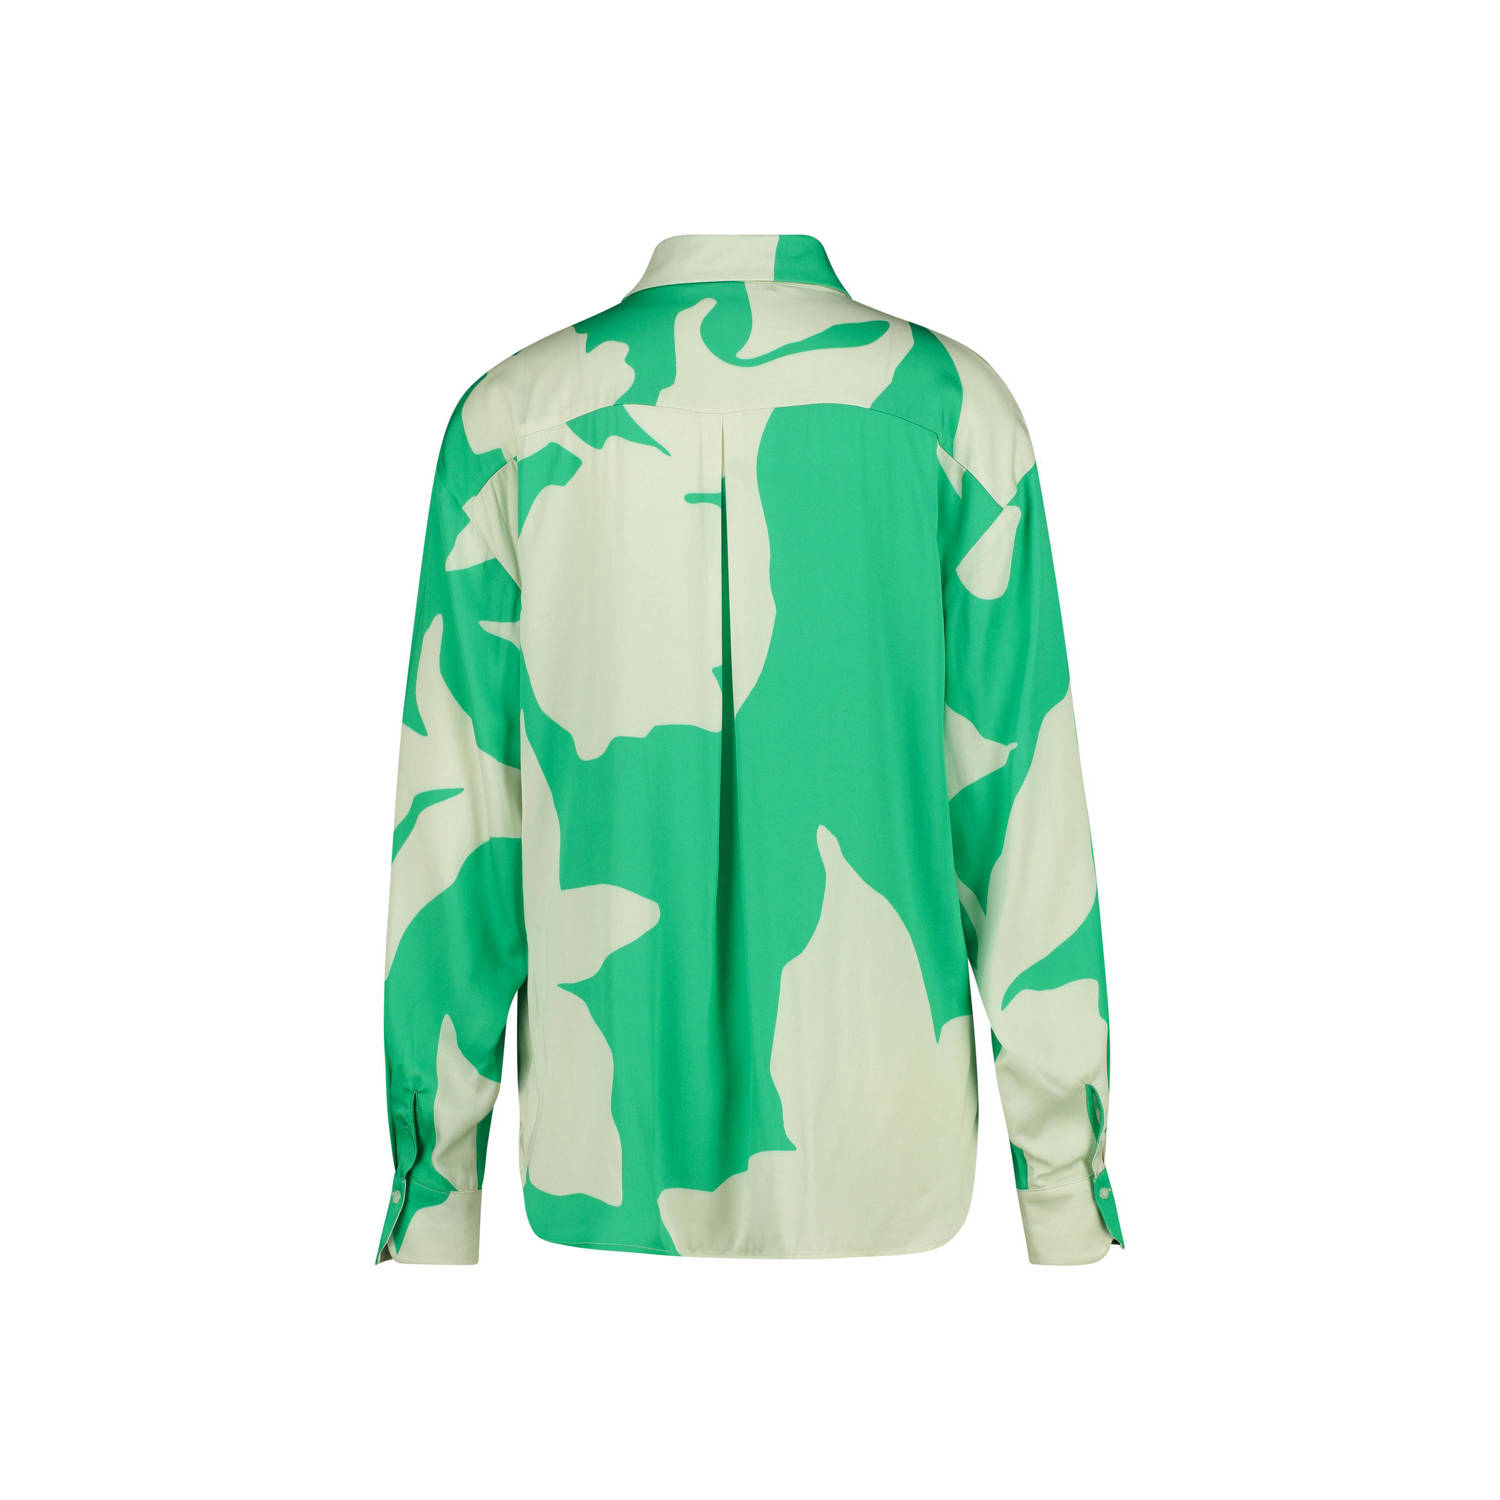 Expresso geweven blouse met all over print groen ecru